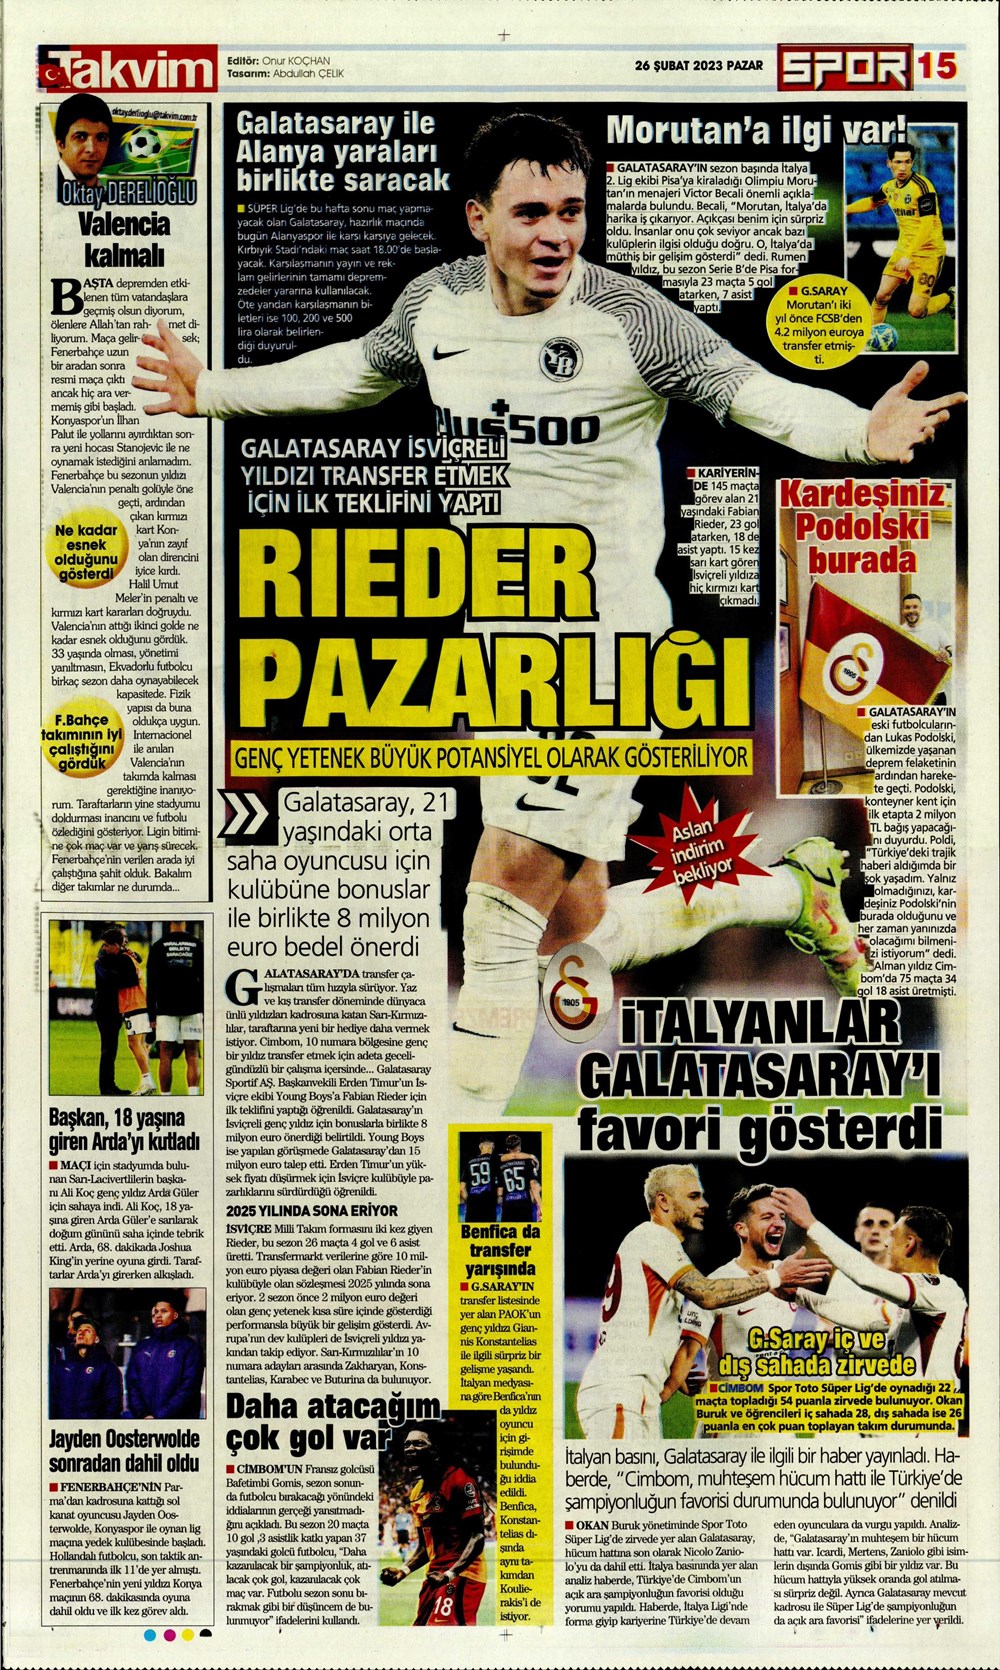 "Valenci'ağa' böyle istedi" - Sporun manşetleri  - 31. Foto